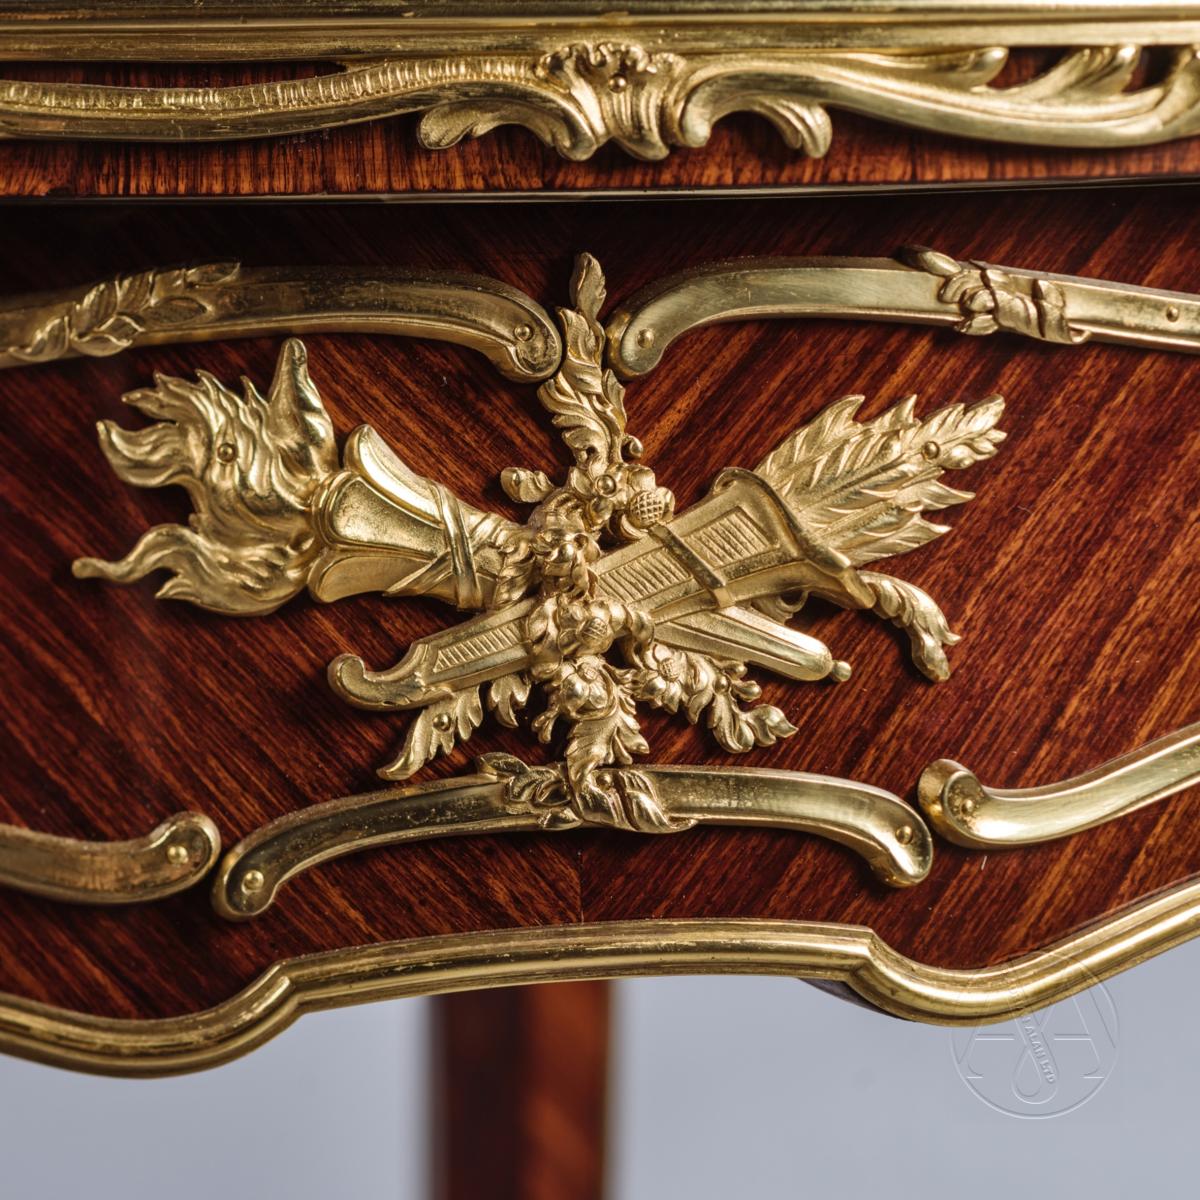 A Louis XV Style Gilt-Bronze Mounted  Vitrine Table By François Linke, The Mounts Designed by Léon Messagé